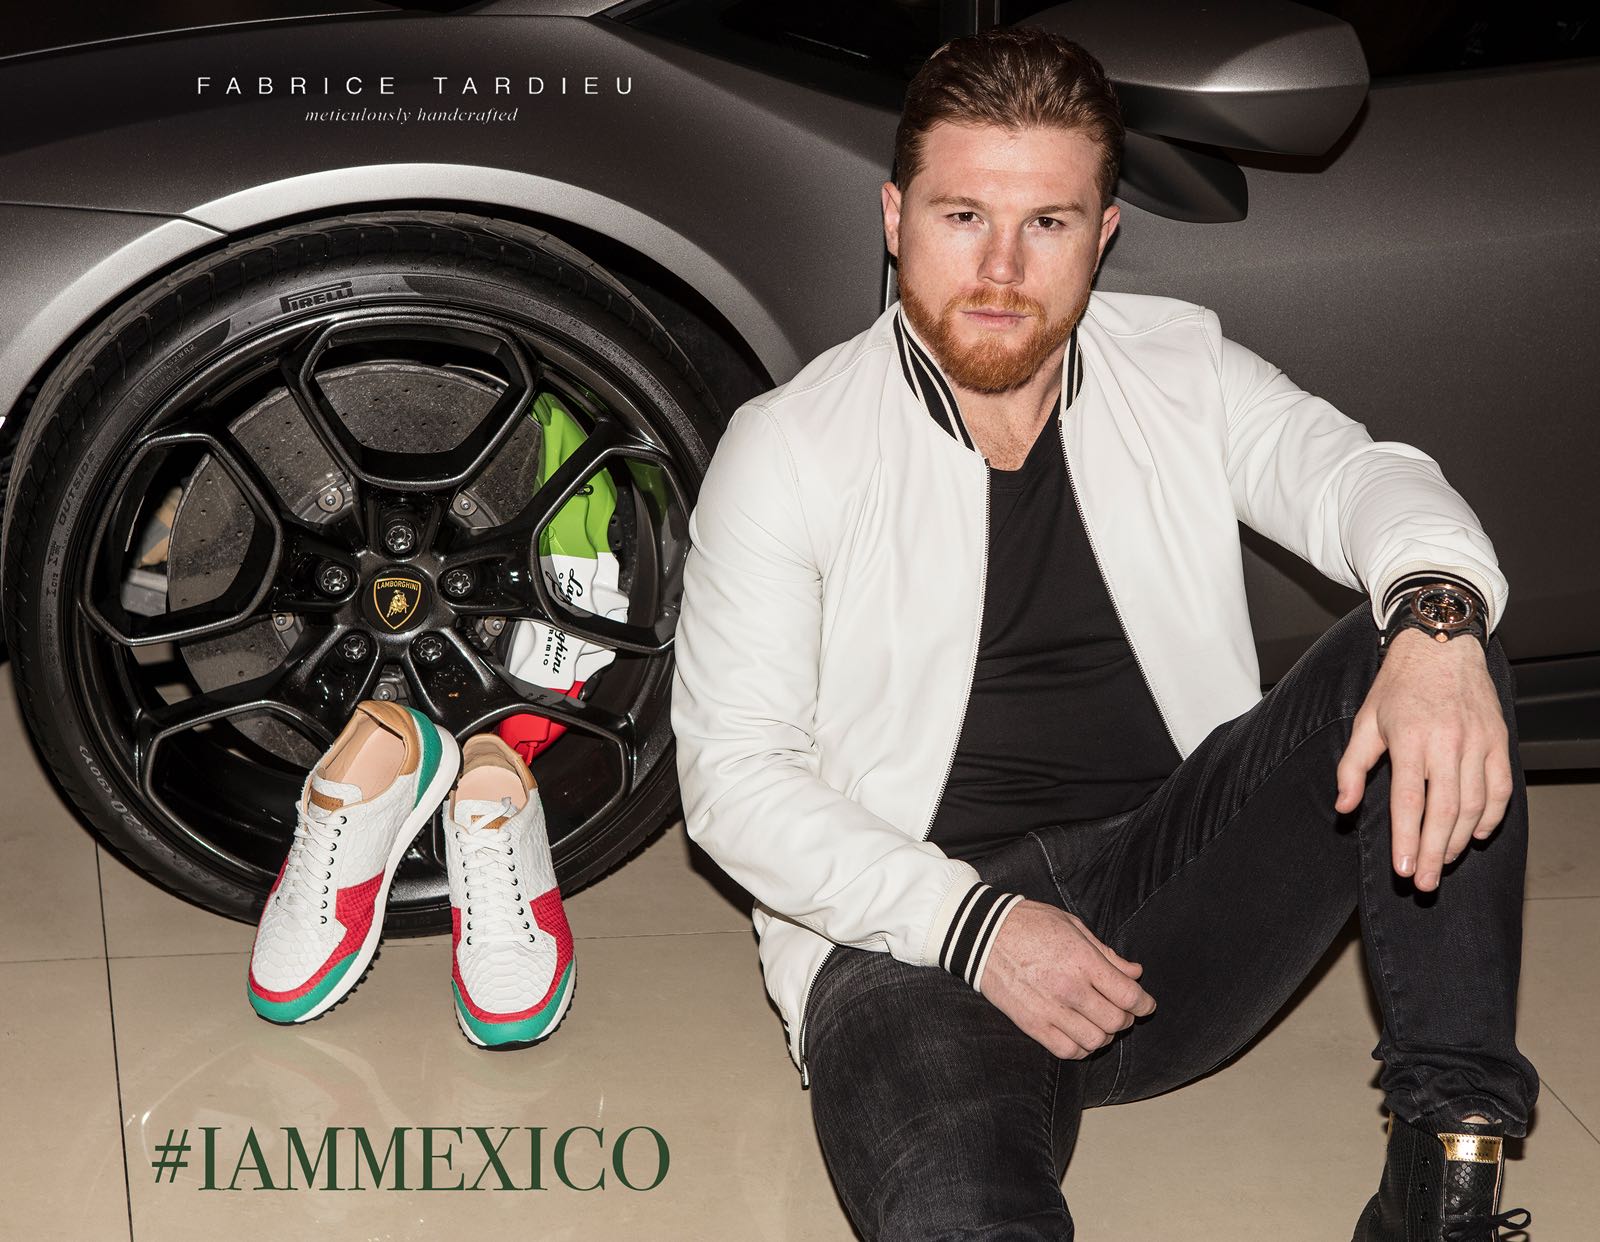 saul canelo alvarez collaborates with designer fabrice tardieu to create the i am mexico sneaker collection